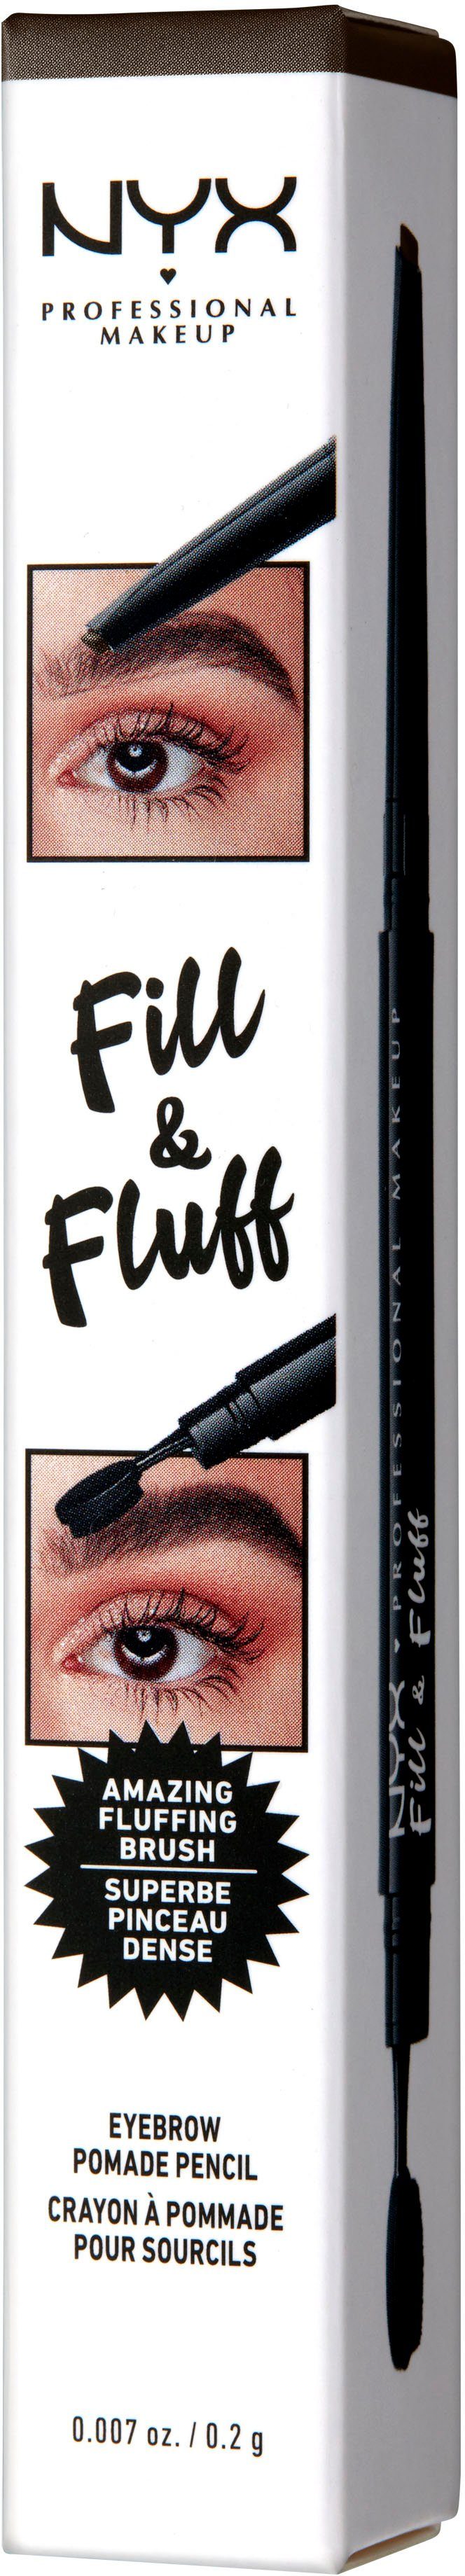 Fluff Fill espresso Pomade NYX & Augenbrauen-Stift Makeup Professional Pencil Eyebrow